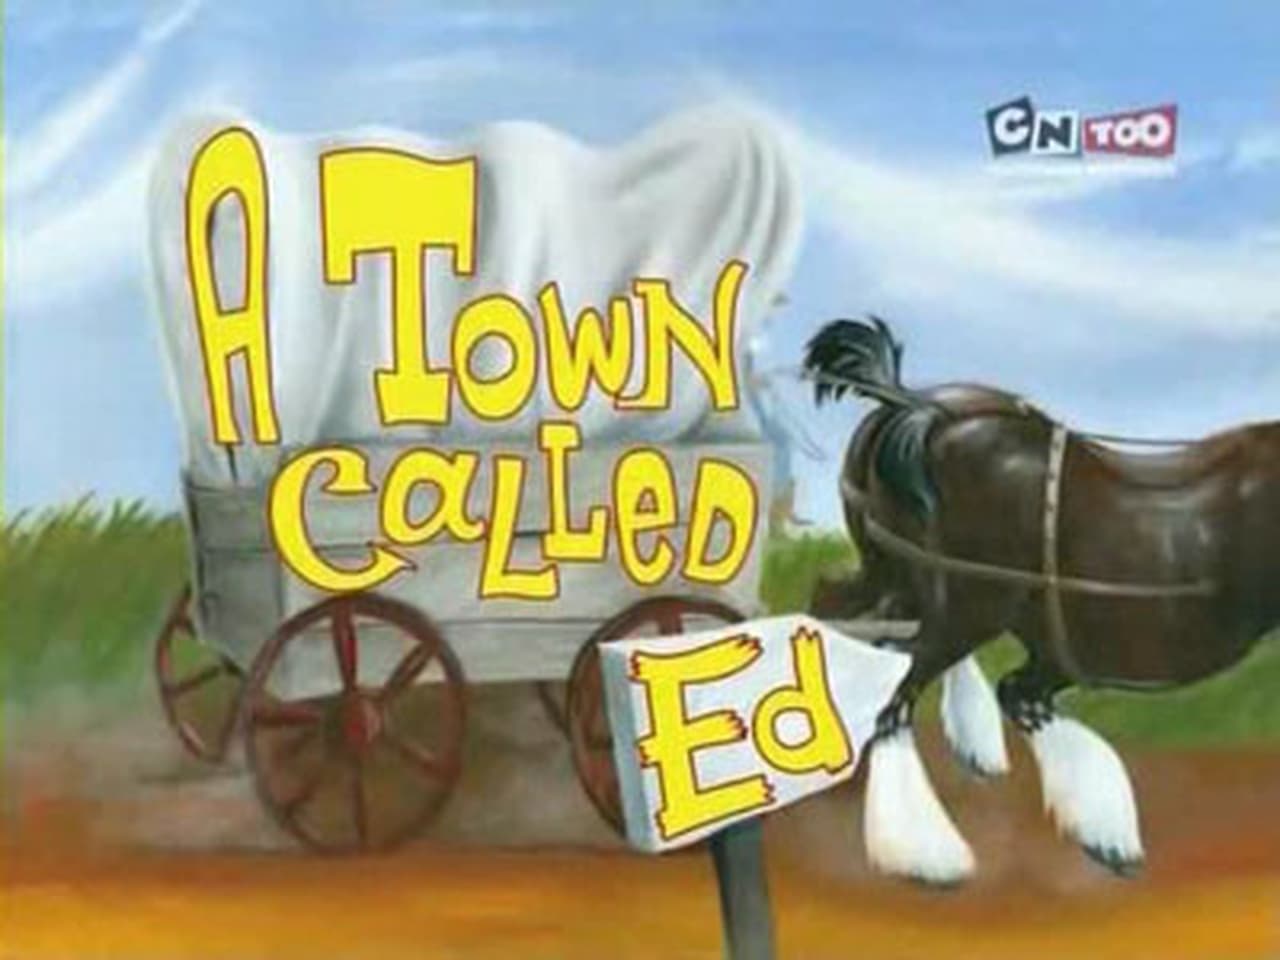 A Town Called Ed